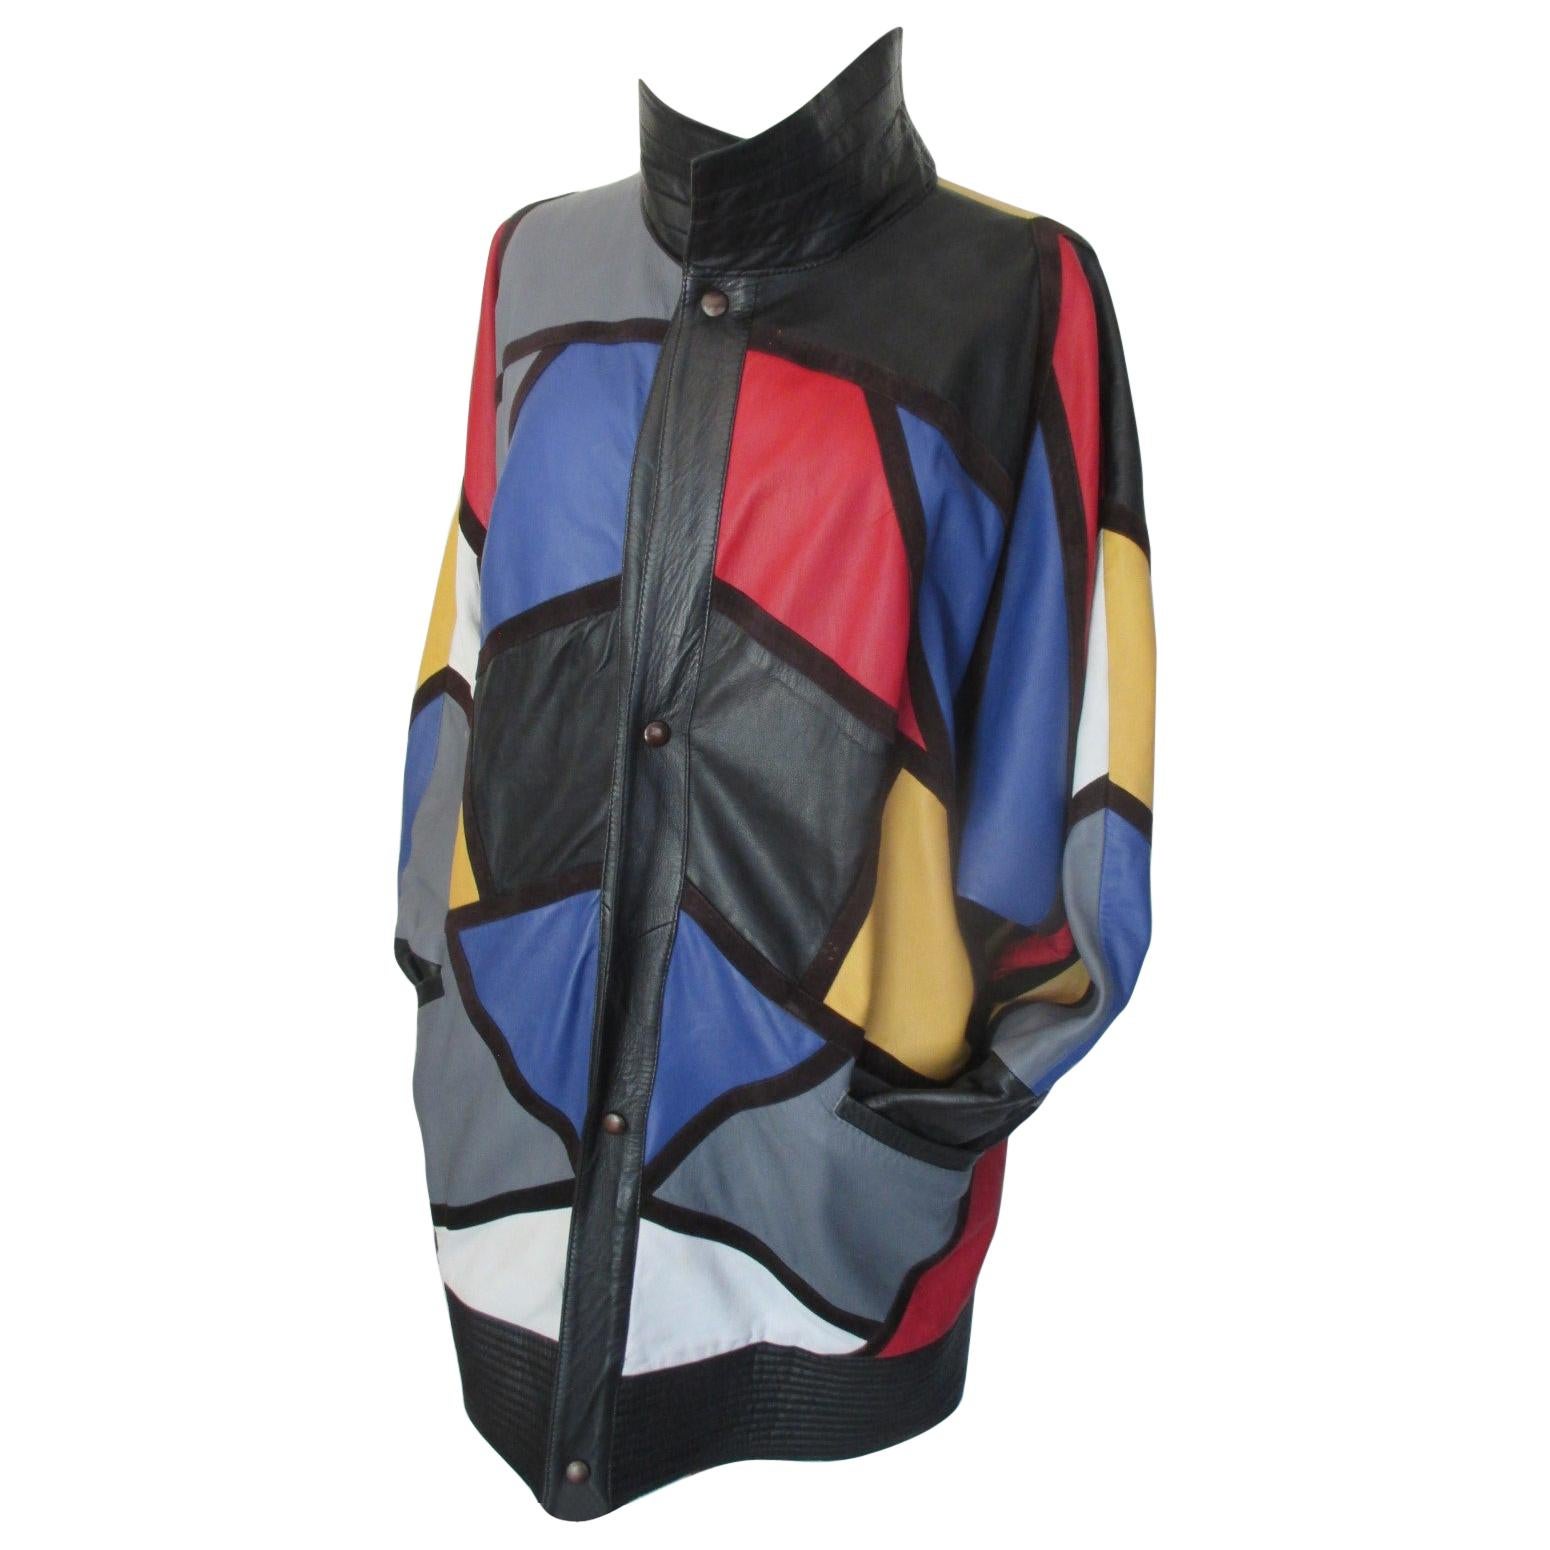 Yves Saint Laurent Piet Mondrian Art Leather Coat 